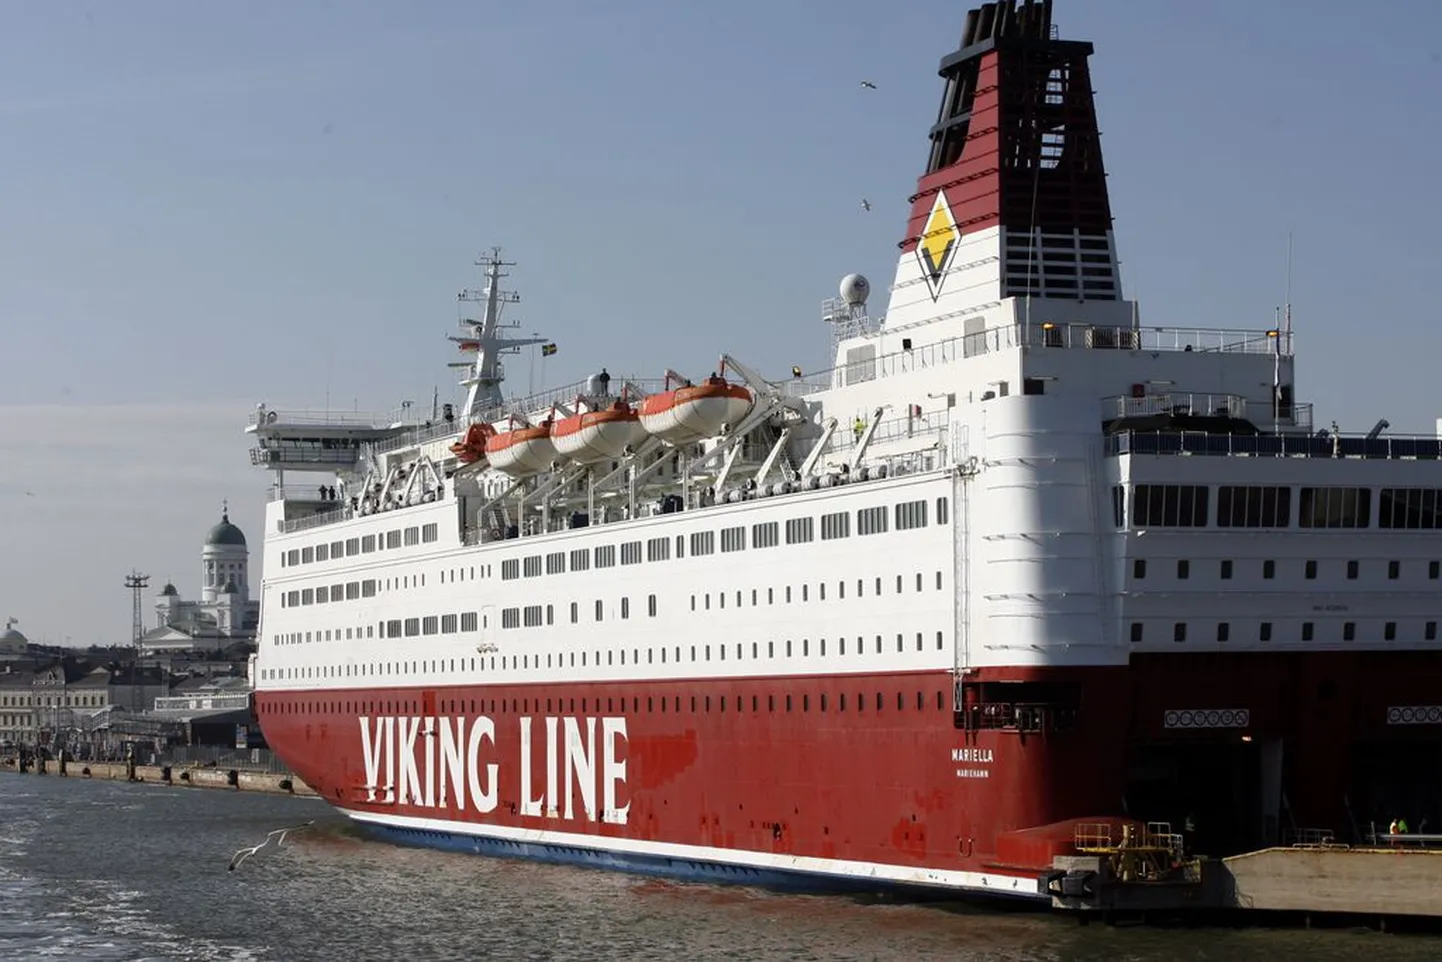 Viking Line'i Mariella Helsingi sadamas..